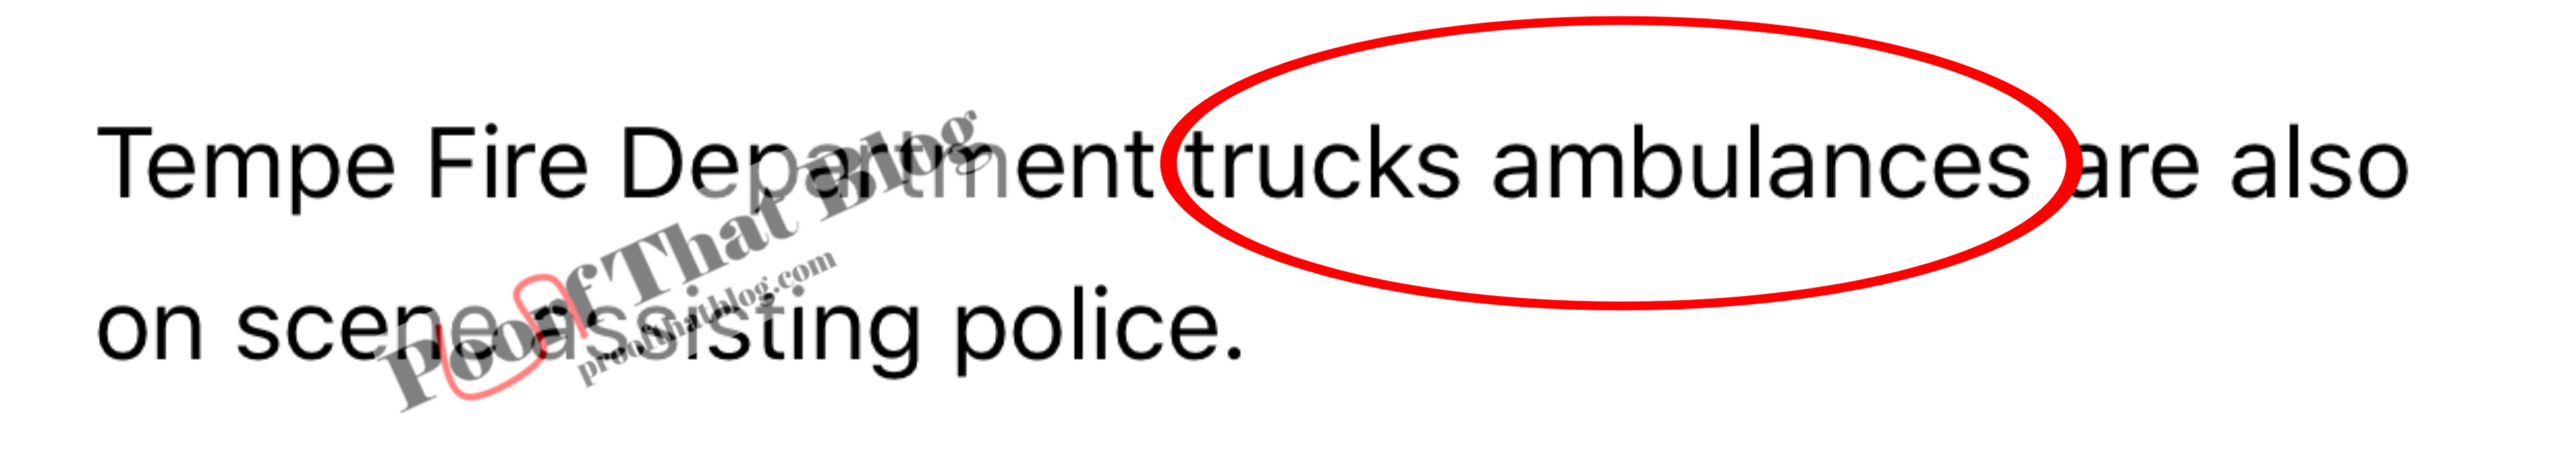 trucks ambulances2